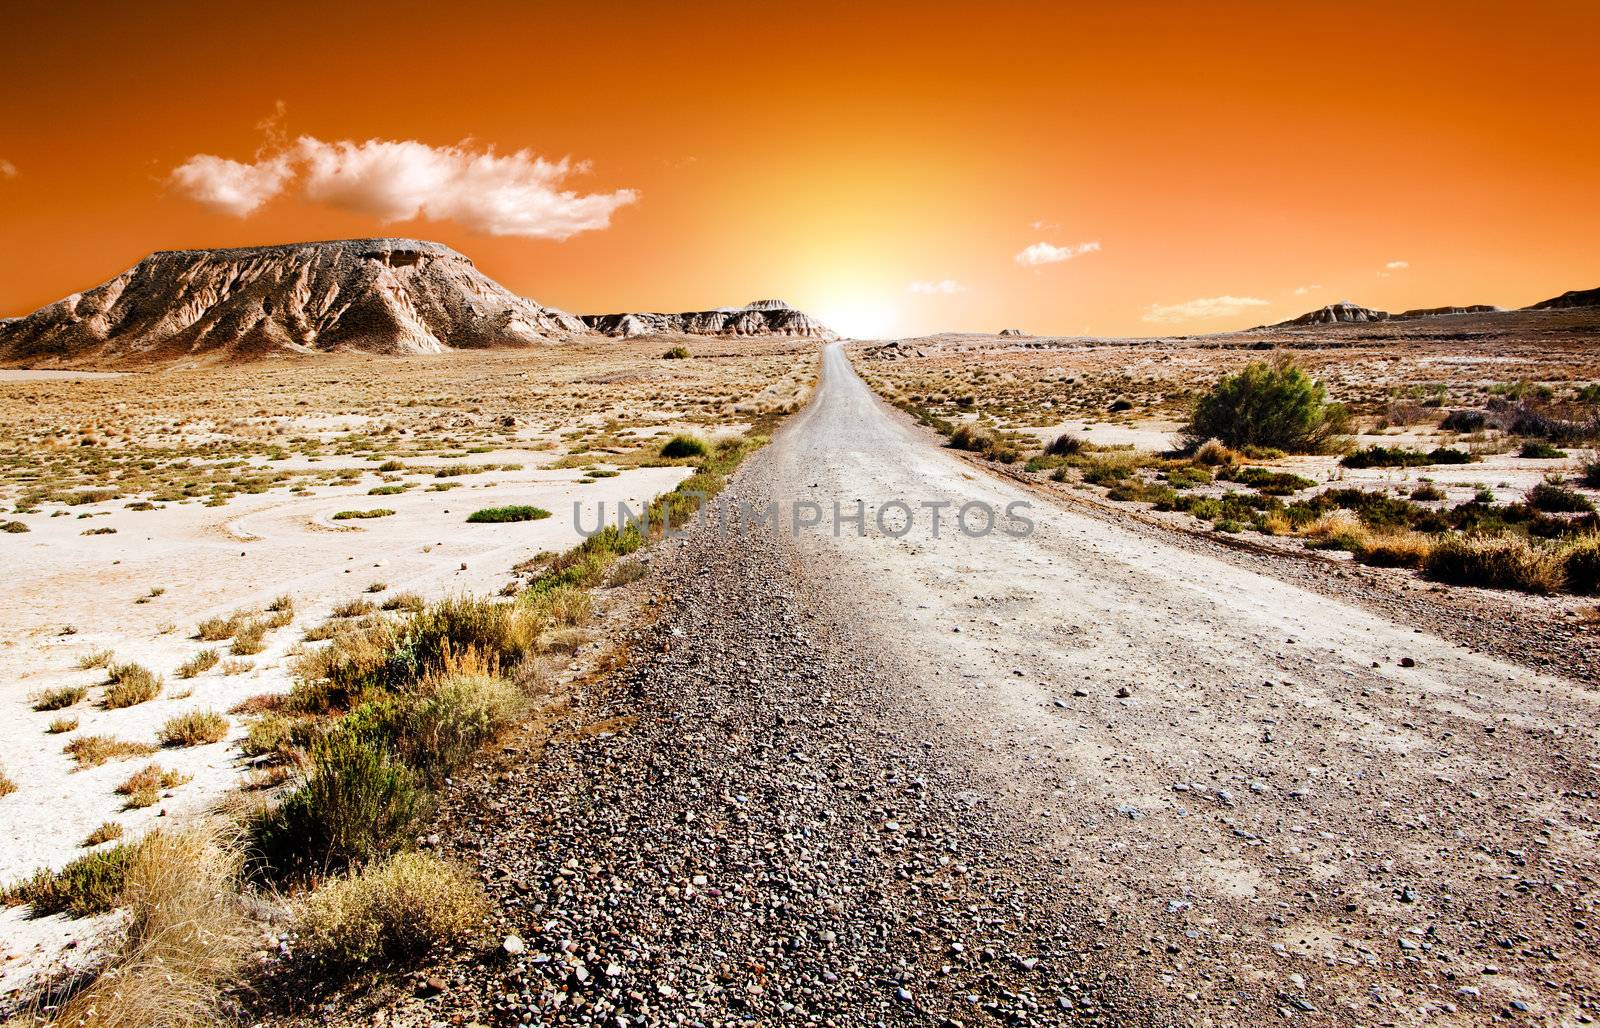 Desert landscape by carloscastilla